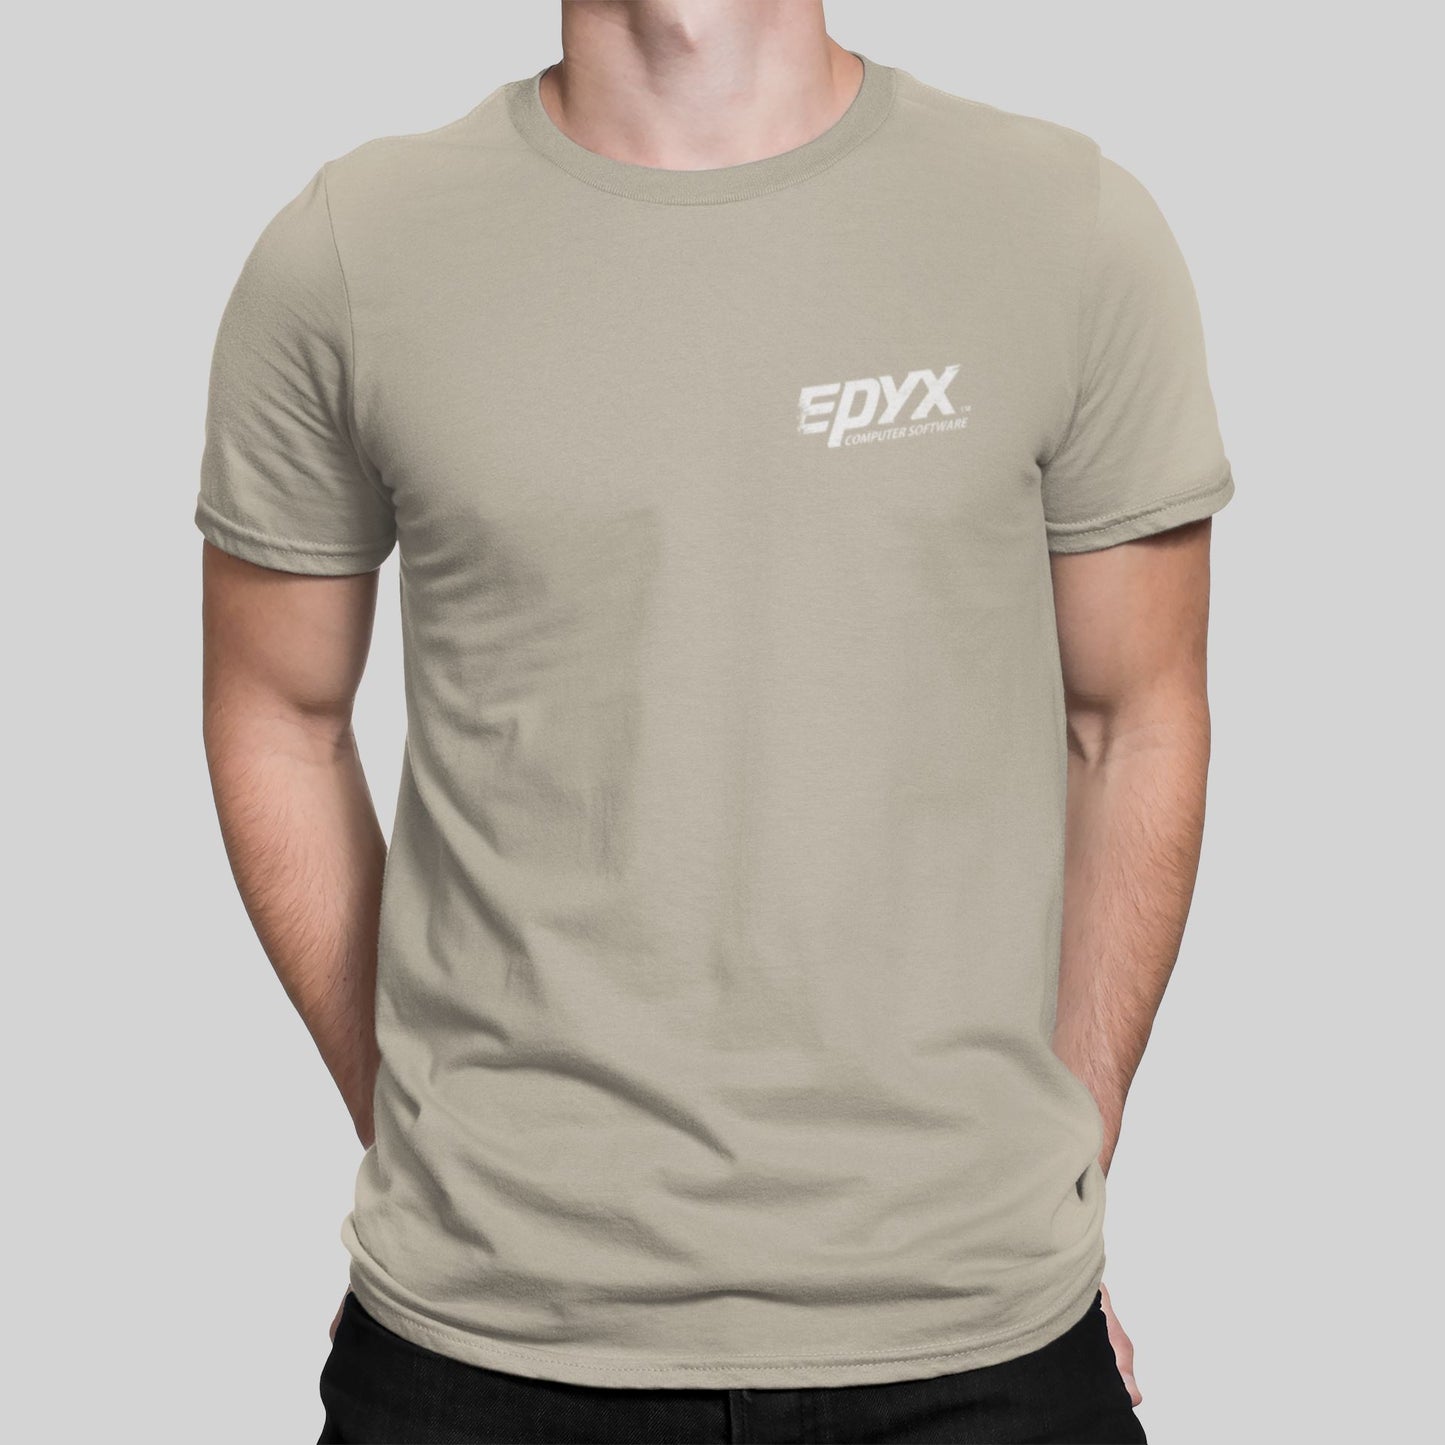 Epyx Software Pocket Print Retro Gaming T-Shirt T-Shirt Seven Squared Small 34-36" Sand 